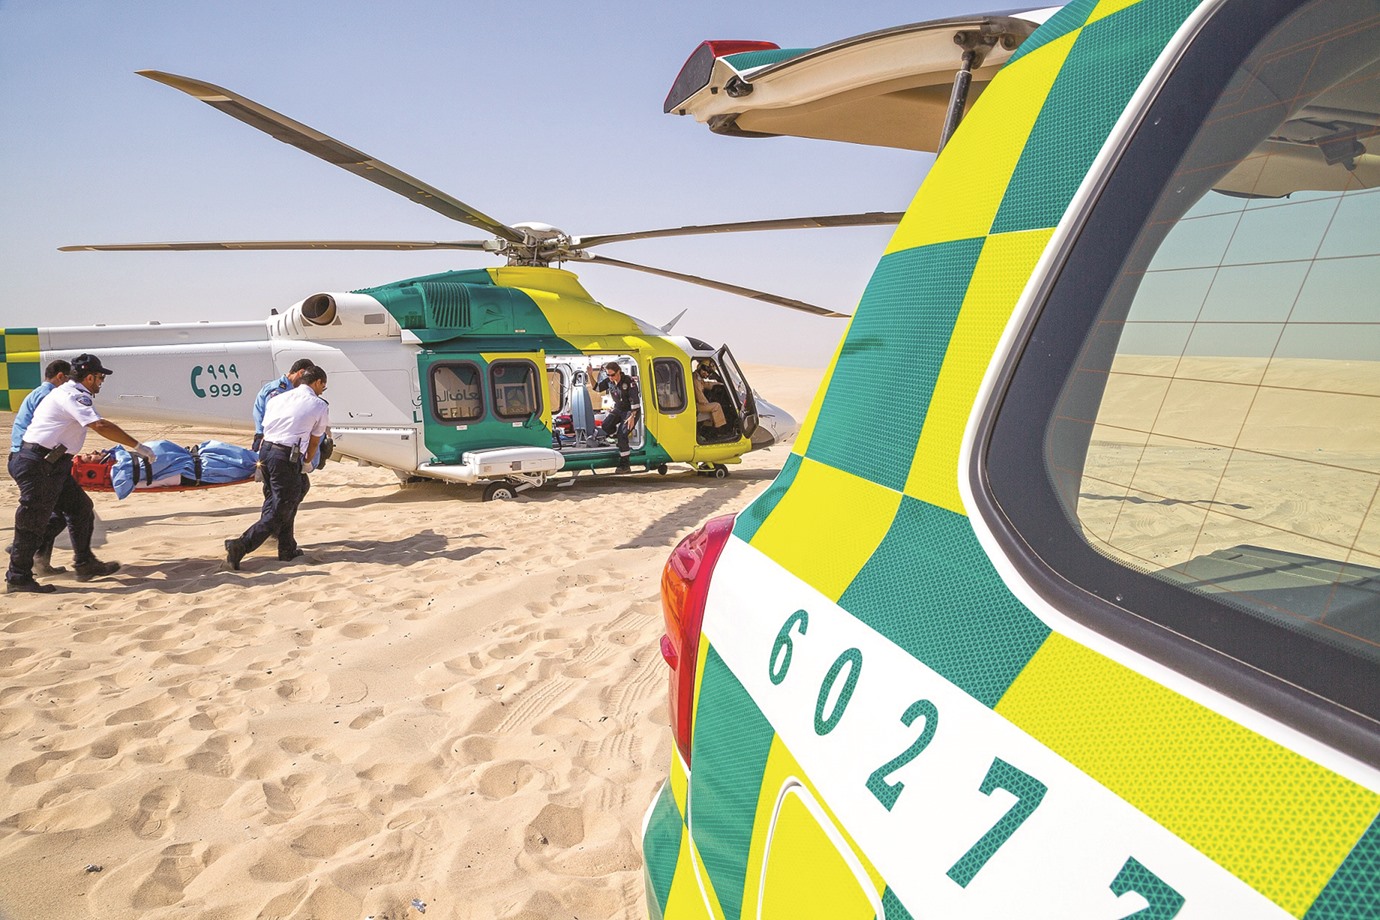 HMC’s Ambulance Service responds to 571 calls in Sealine area